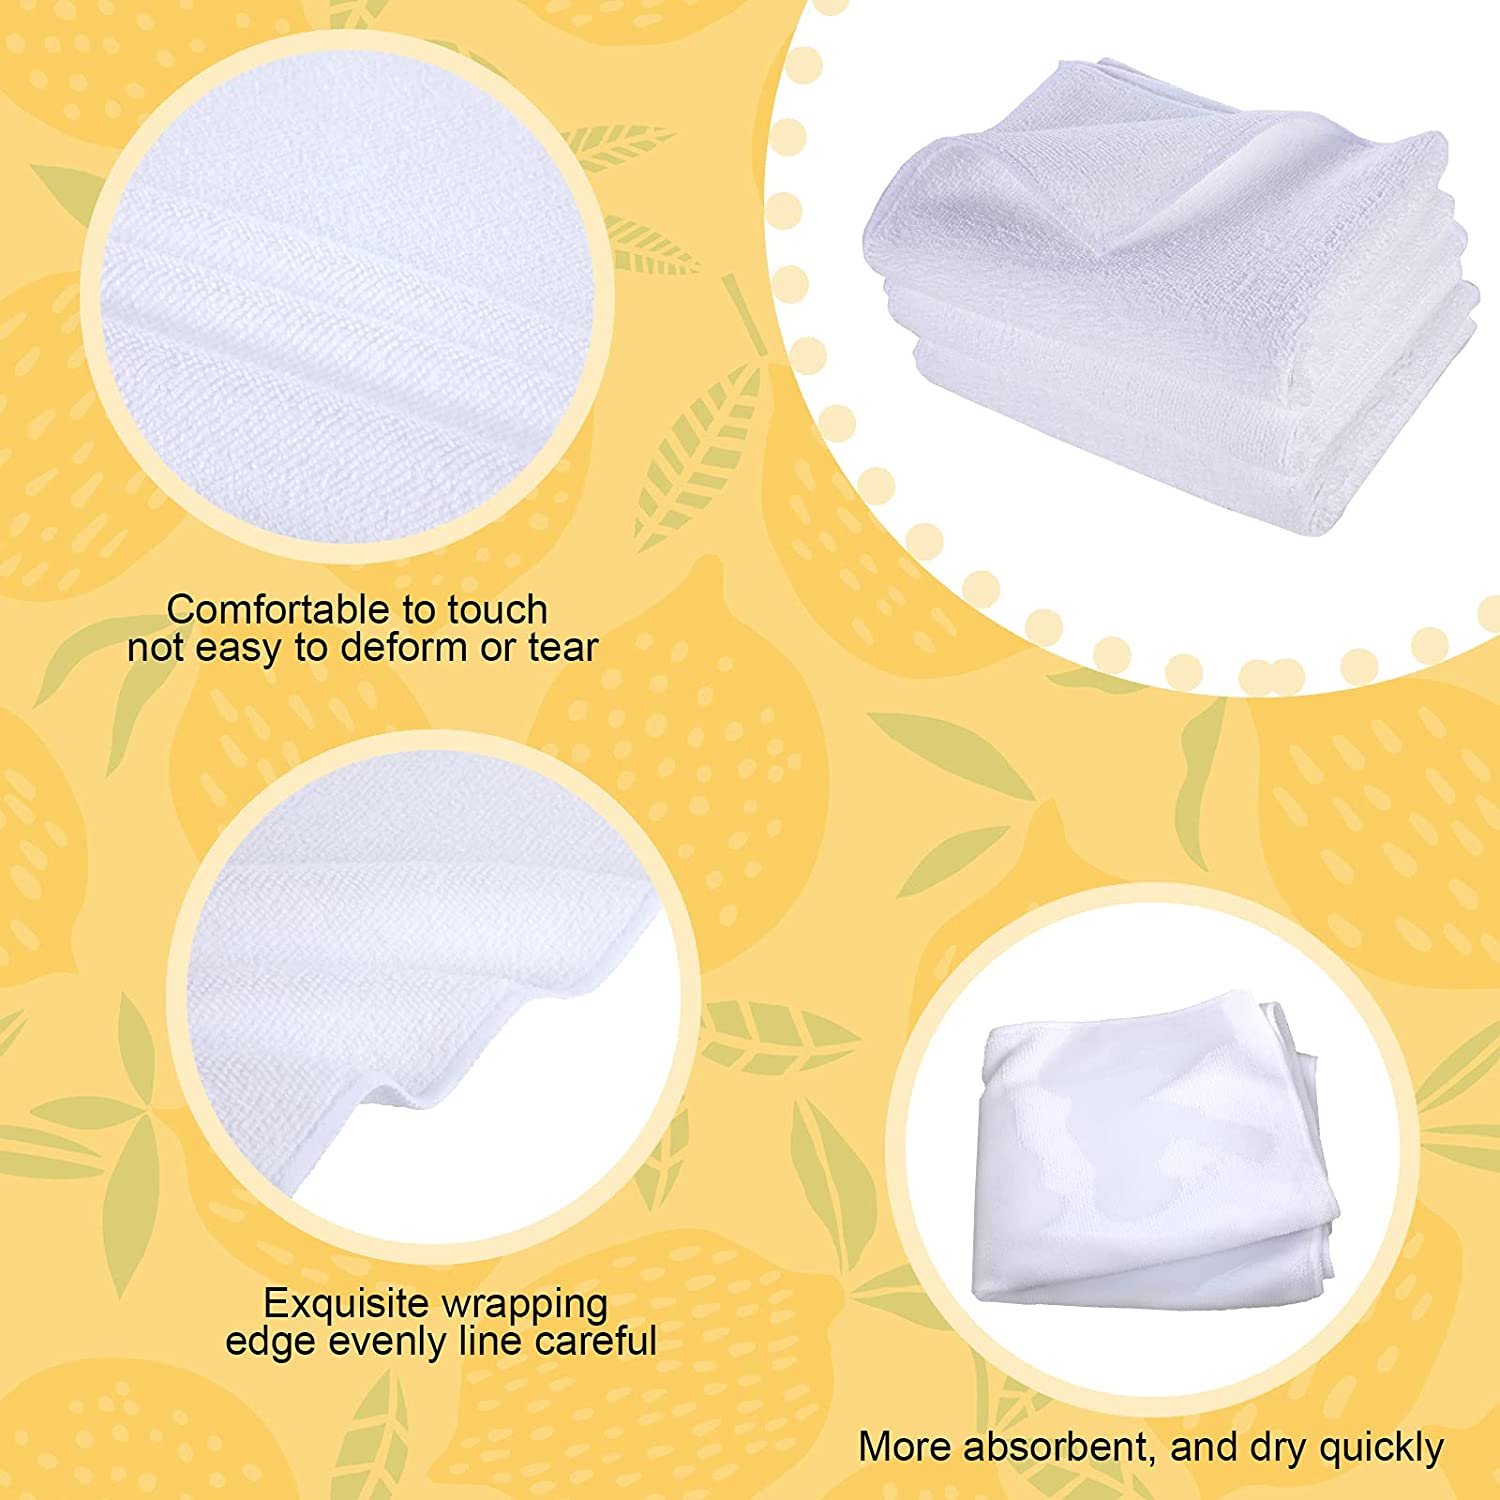 How to Sublimate on a Microfiber Tea Towel 